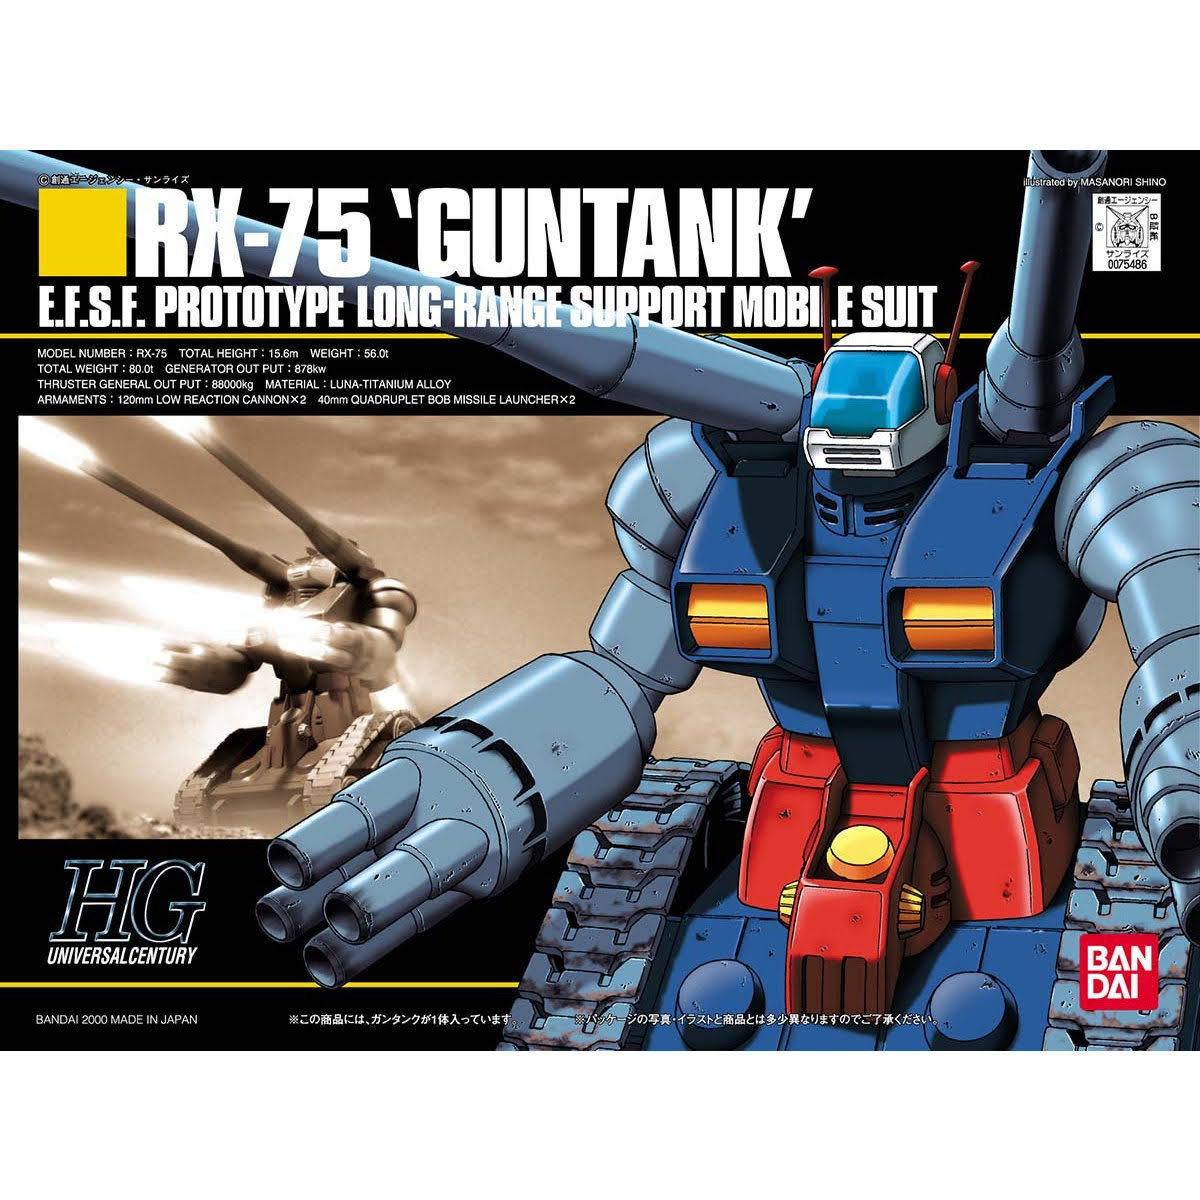 Bandai Spirits HGUC Mobile Suit Gundam RX-75 Guntank Model Kit - 1:144 Scale